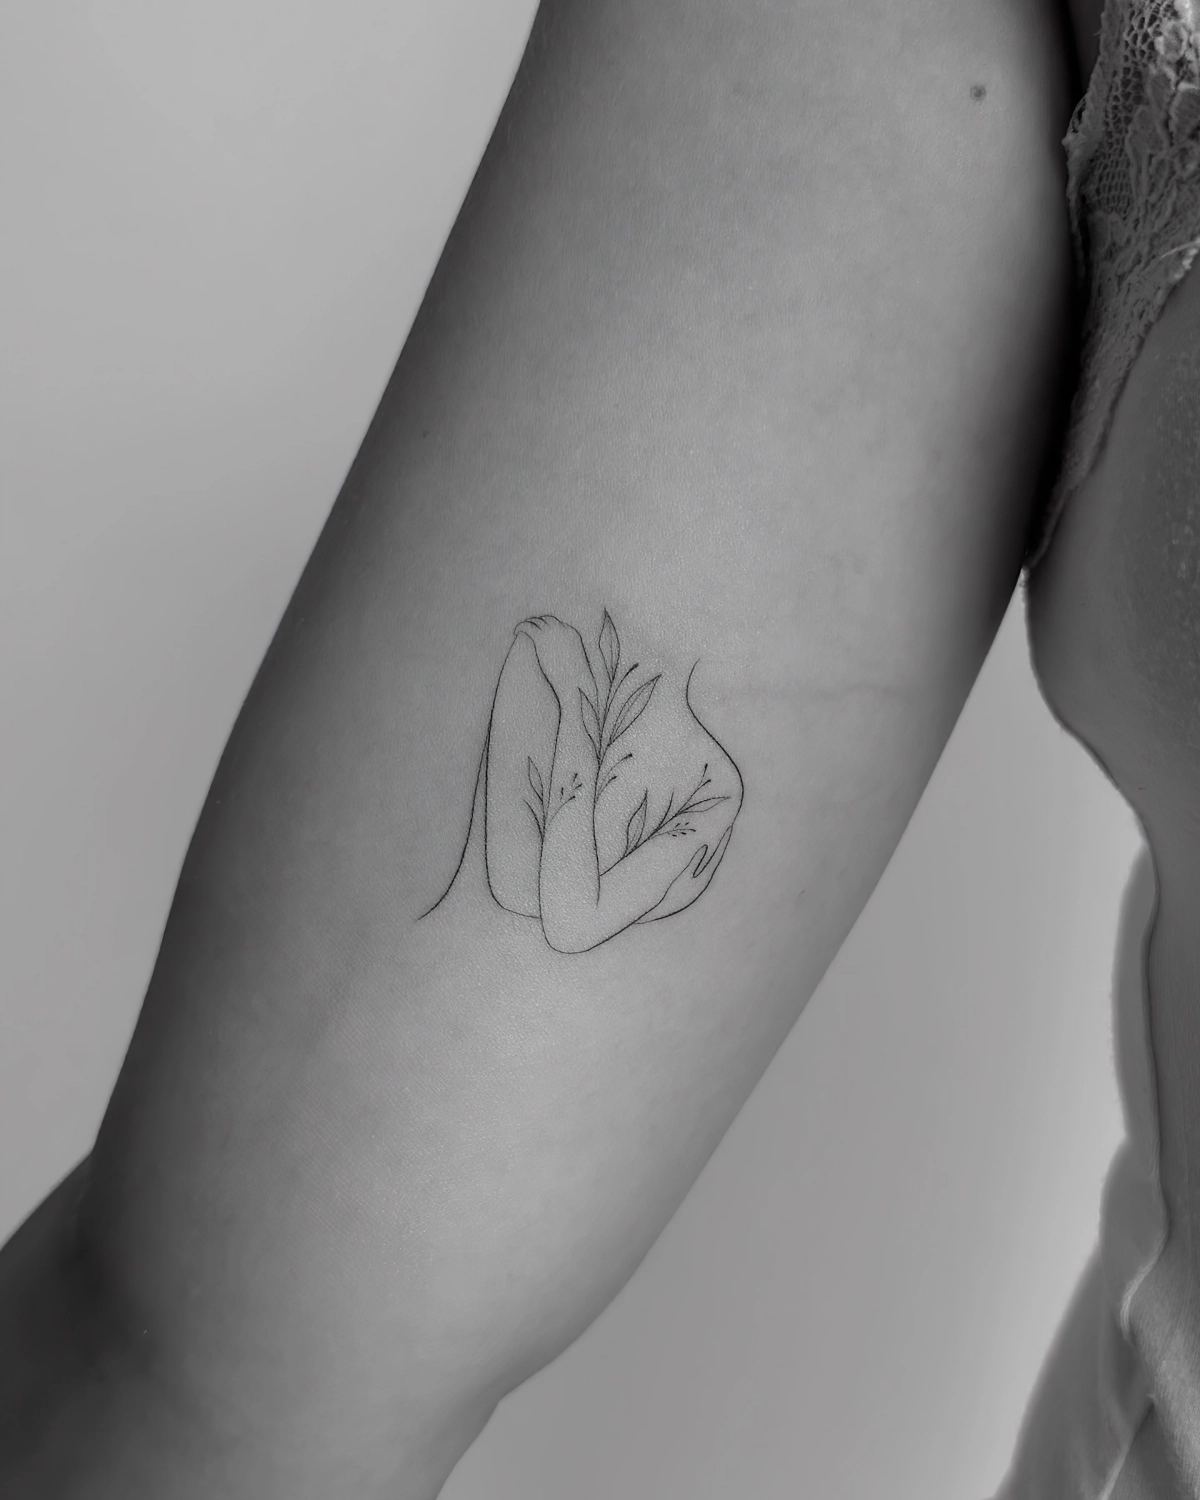 dessin minimaliste lignes fines silhouette corps femme feuilles bras